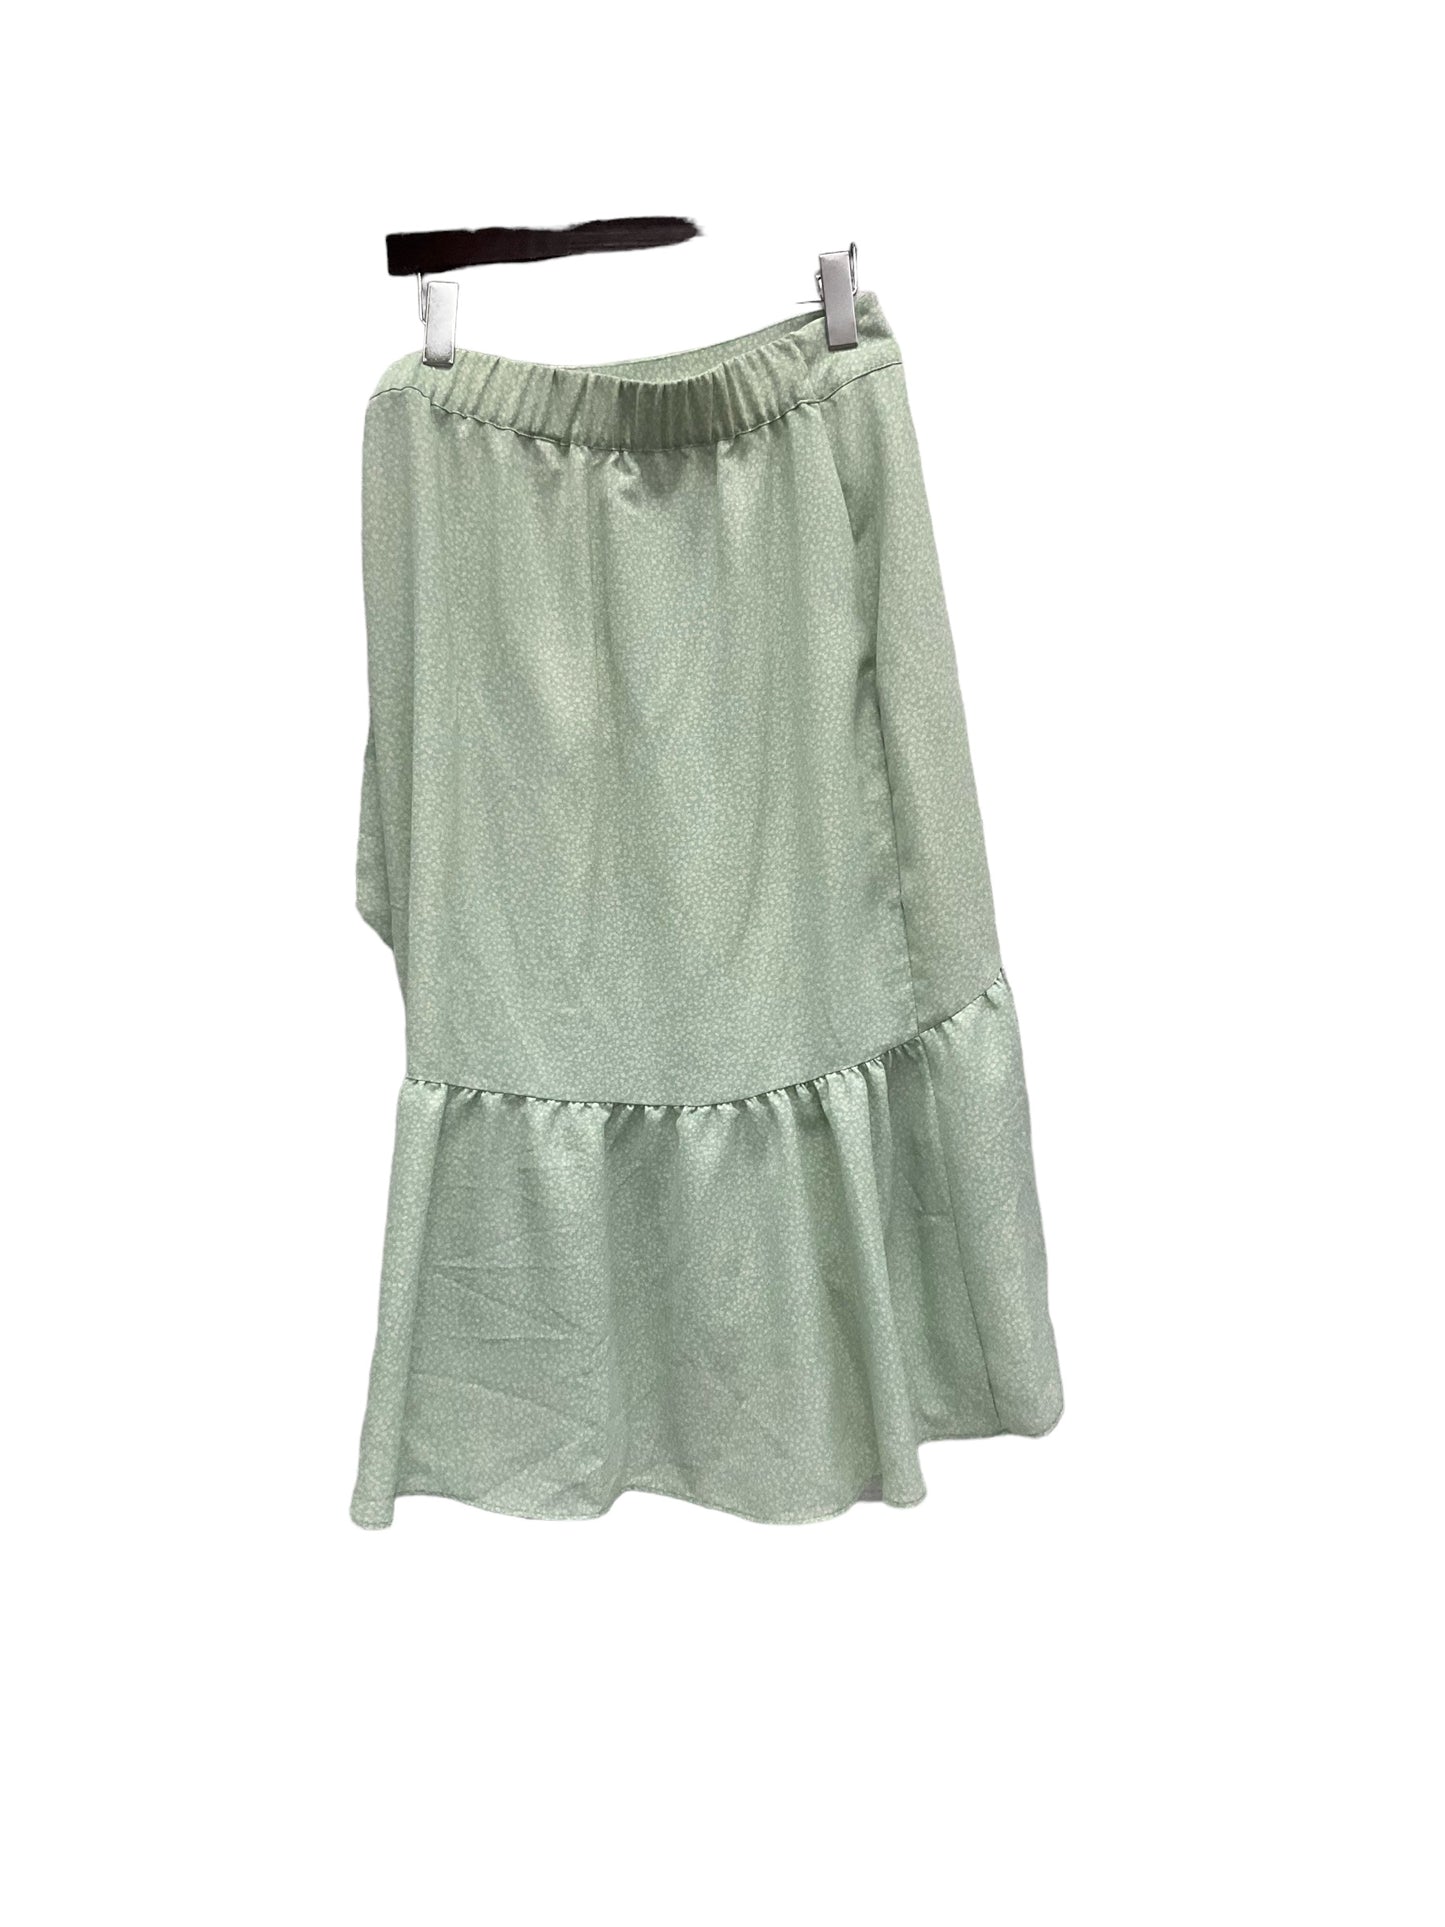 Skirt Midi By Lc Lauren Conrad  Size: M